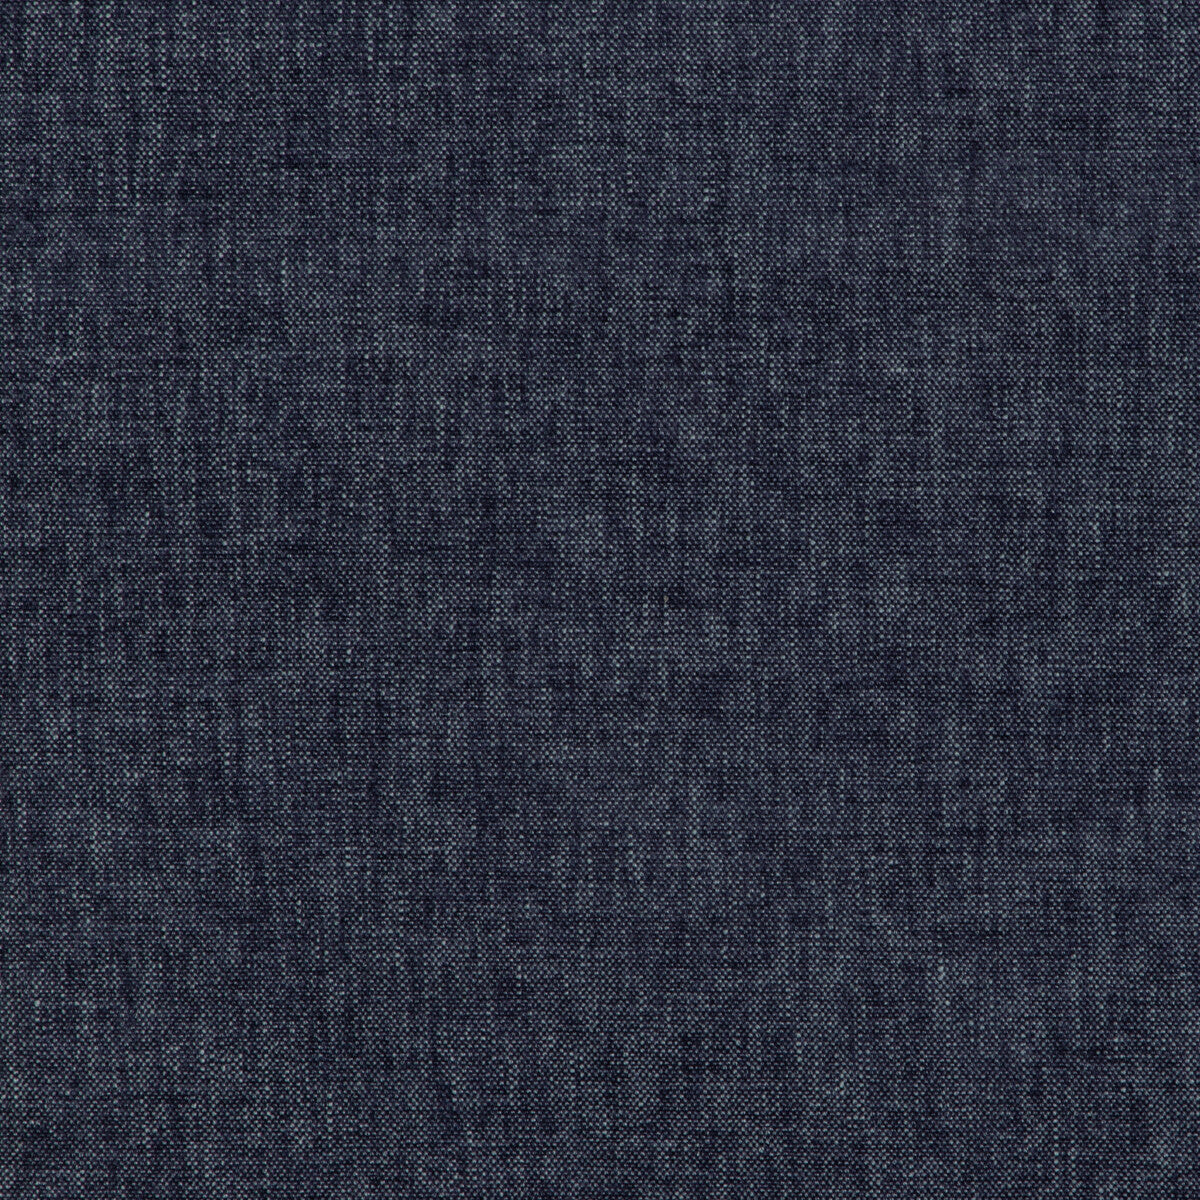 Kravet Smart fabric in 36663-5 color - pattern 36663.5.0 - by Kravet Smart in the Performance Kravetarmor collection